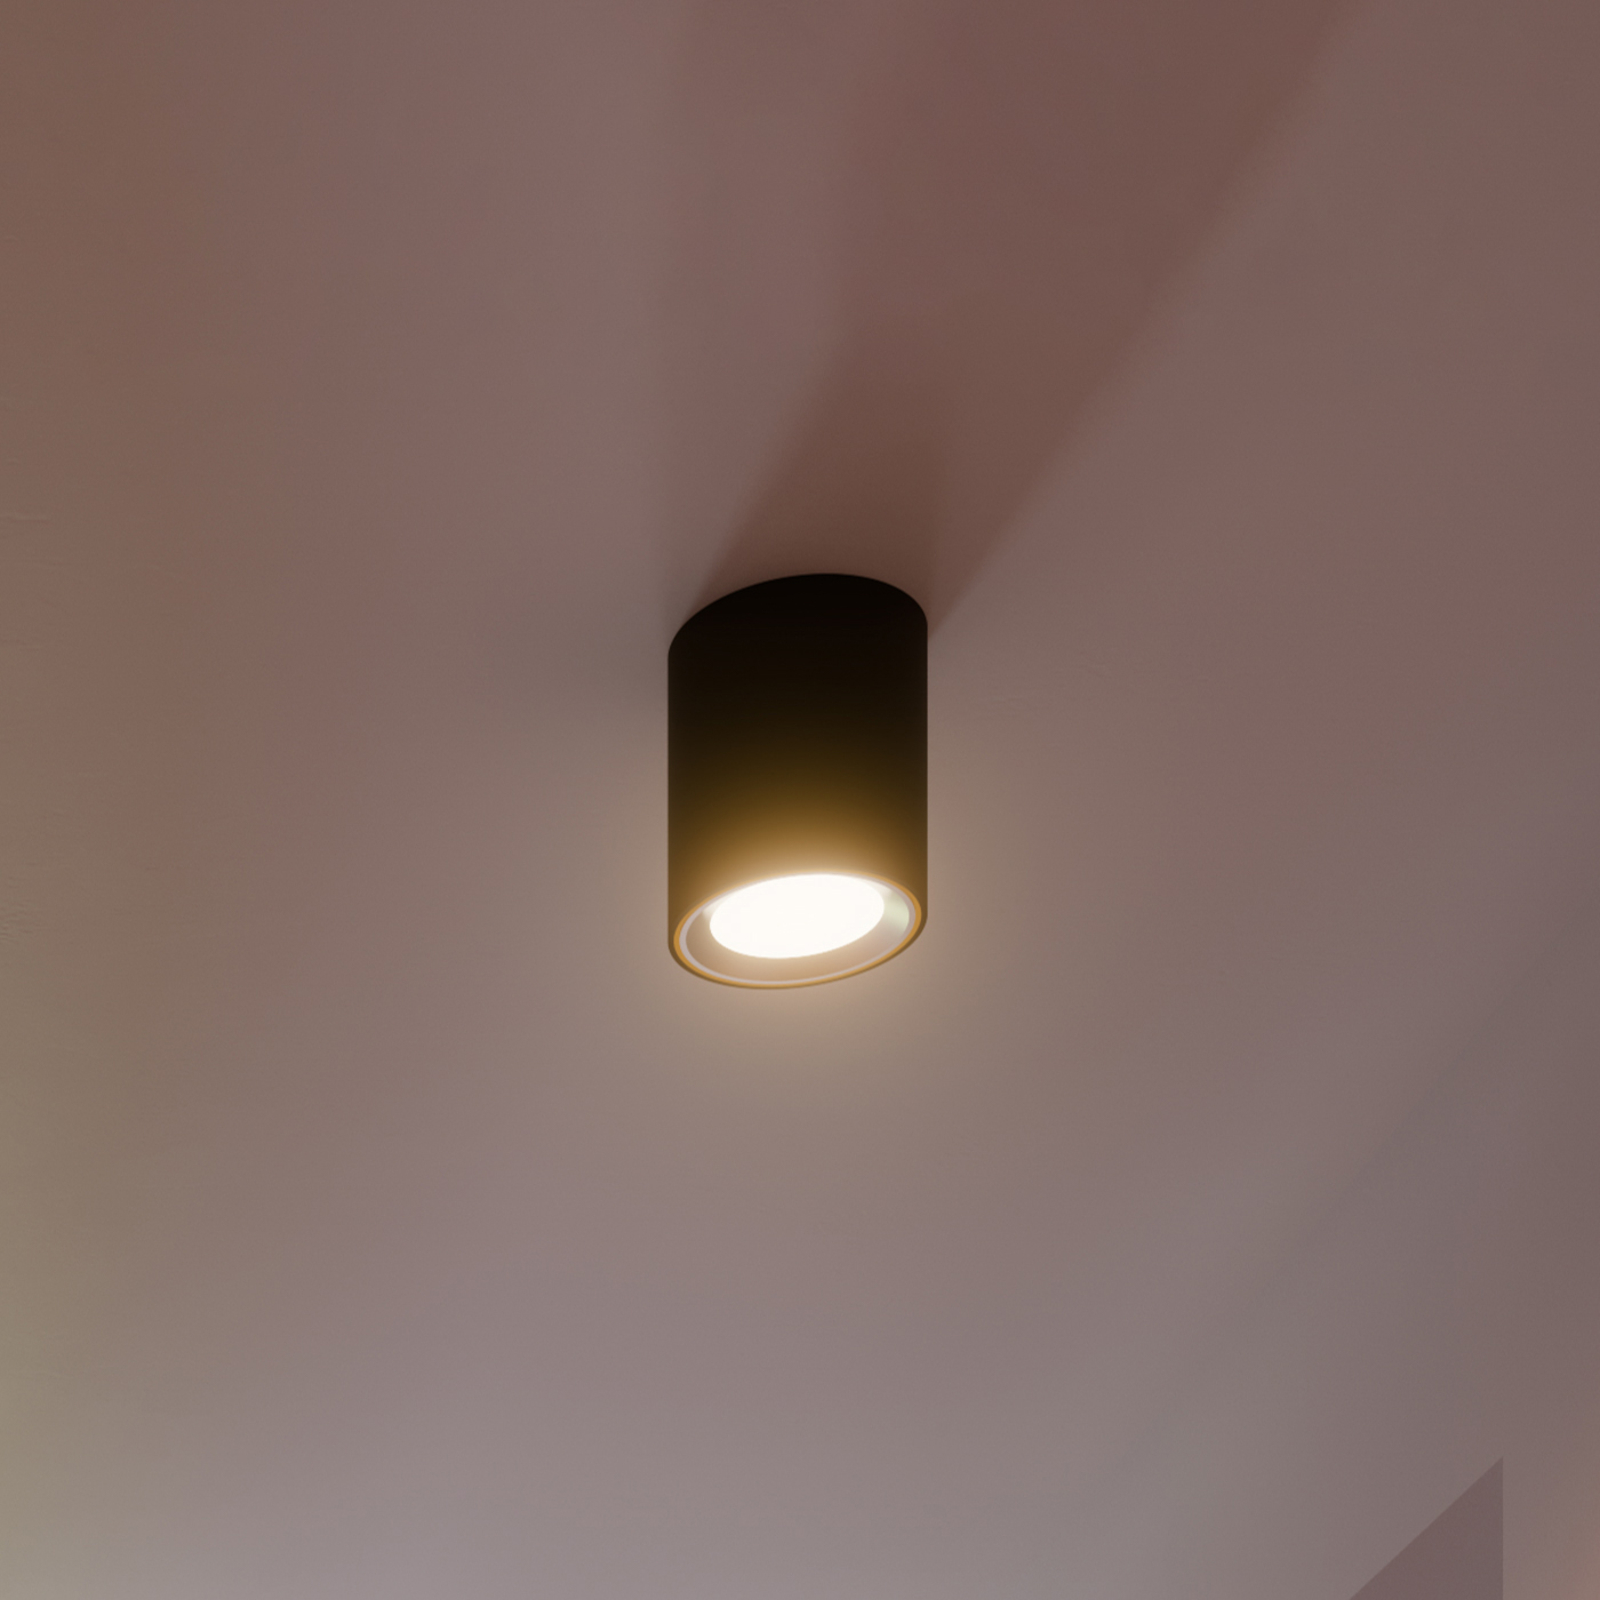 LED-takspot Landon Smart, svart, höjd 14 cm